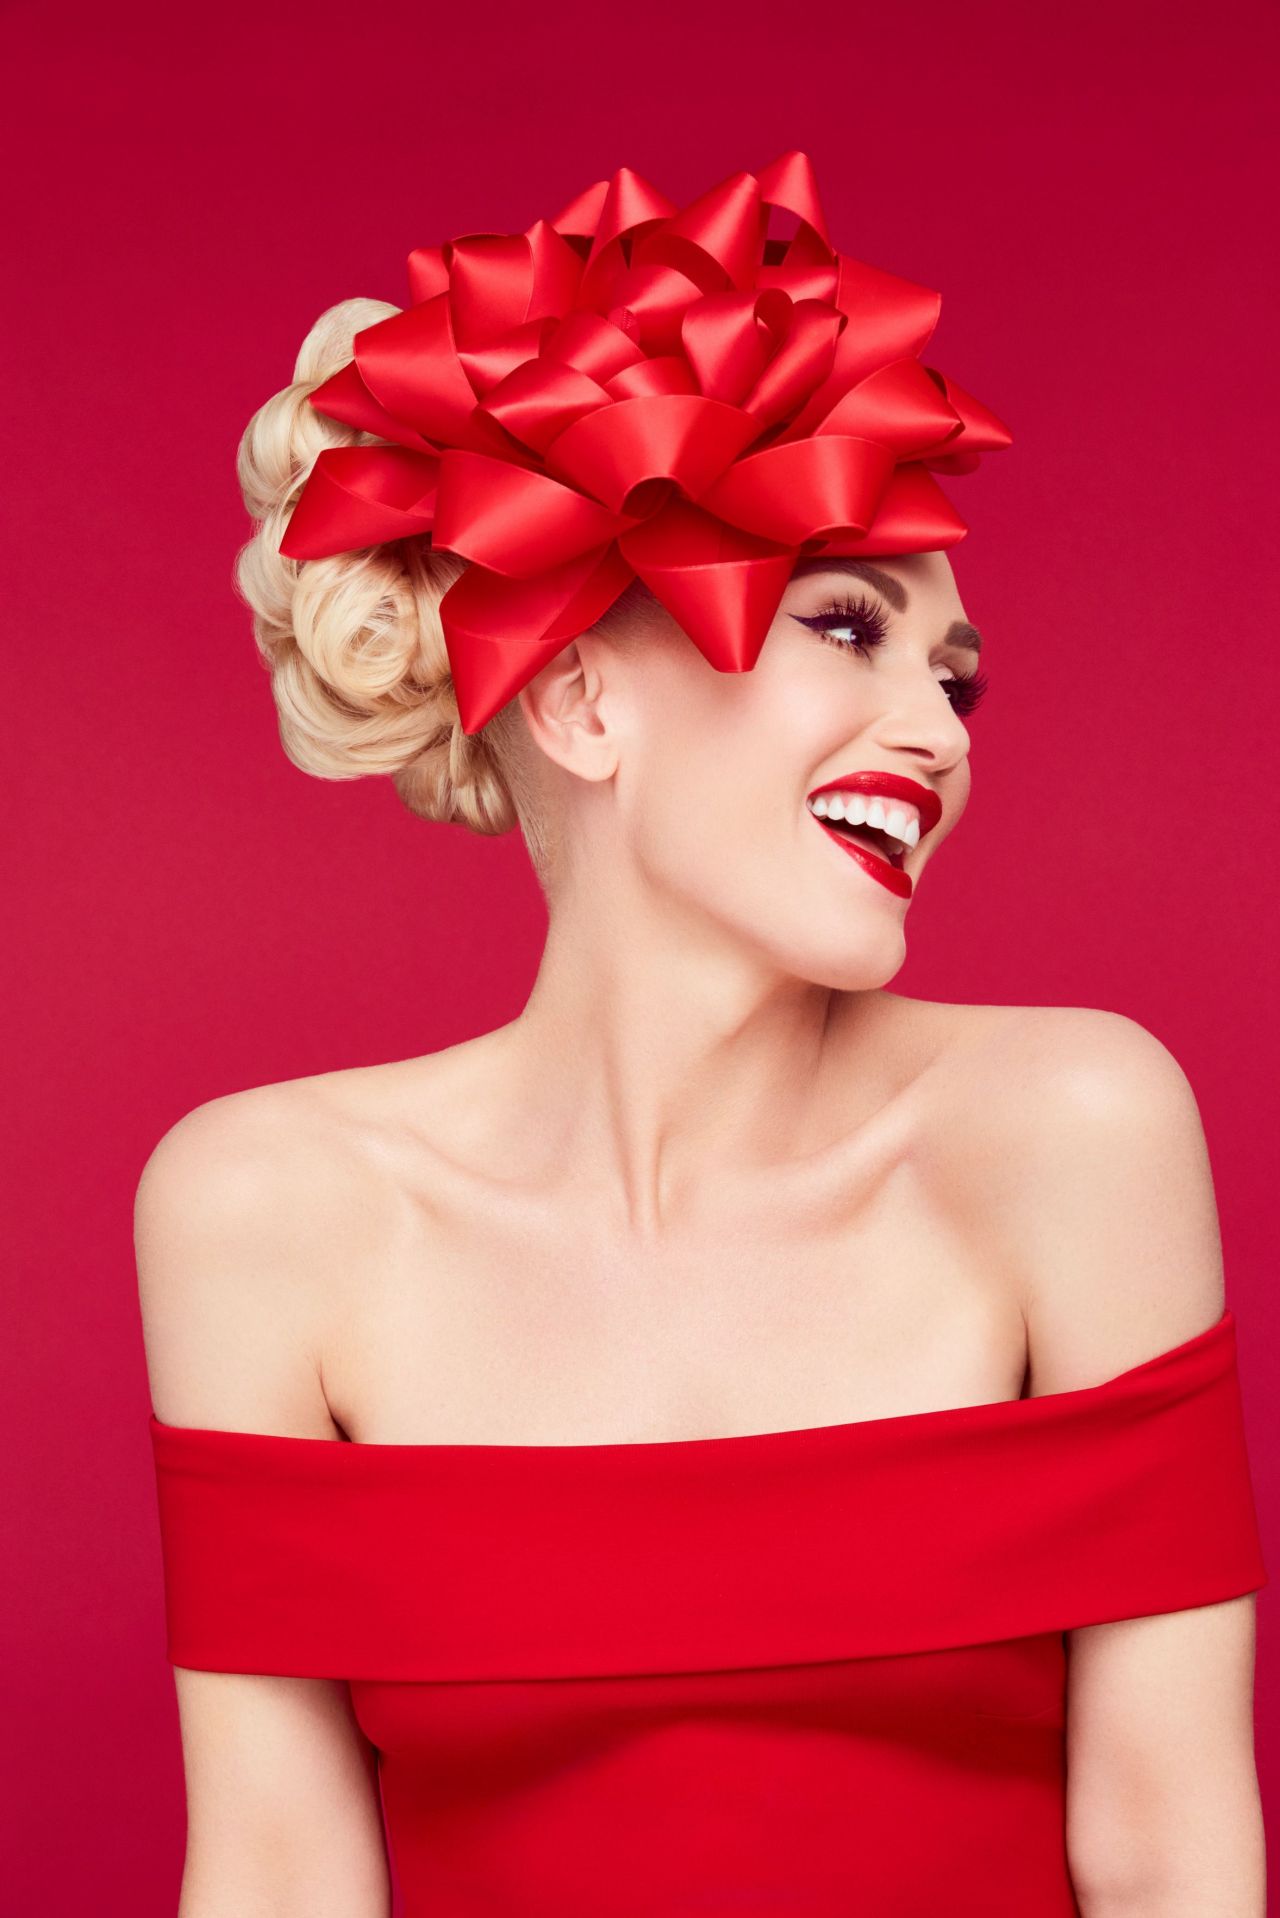 Gwen Stefani - You Make It Feel Like Christmas Photoshoot